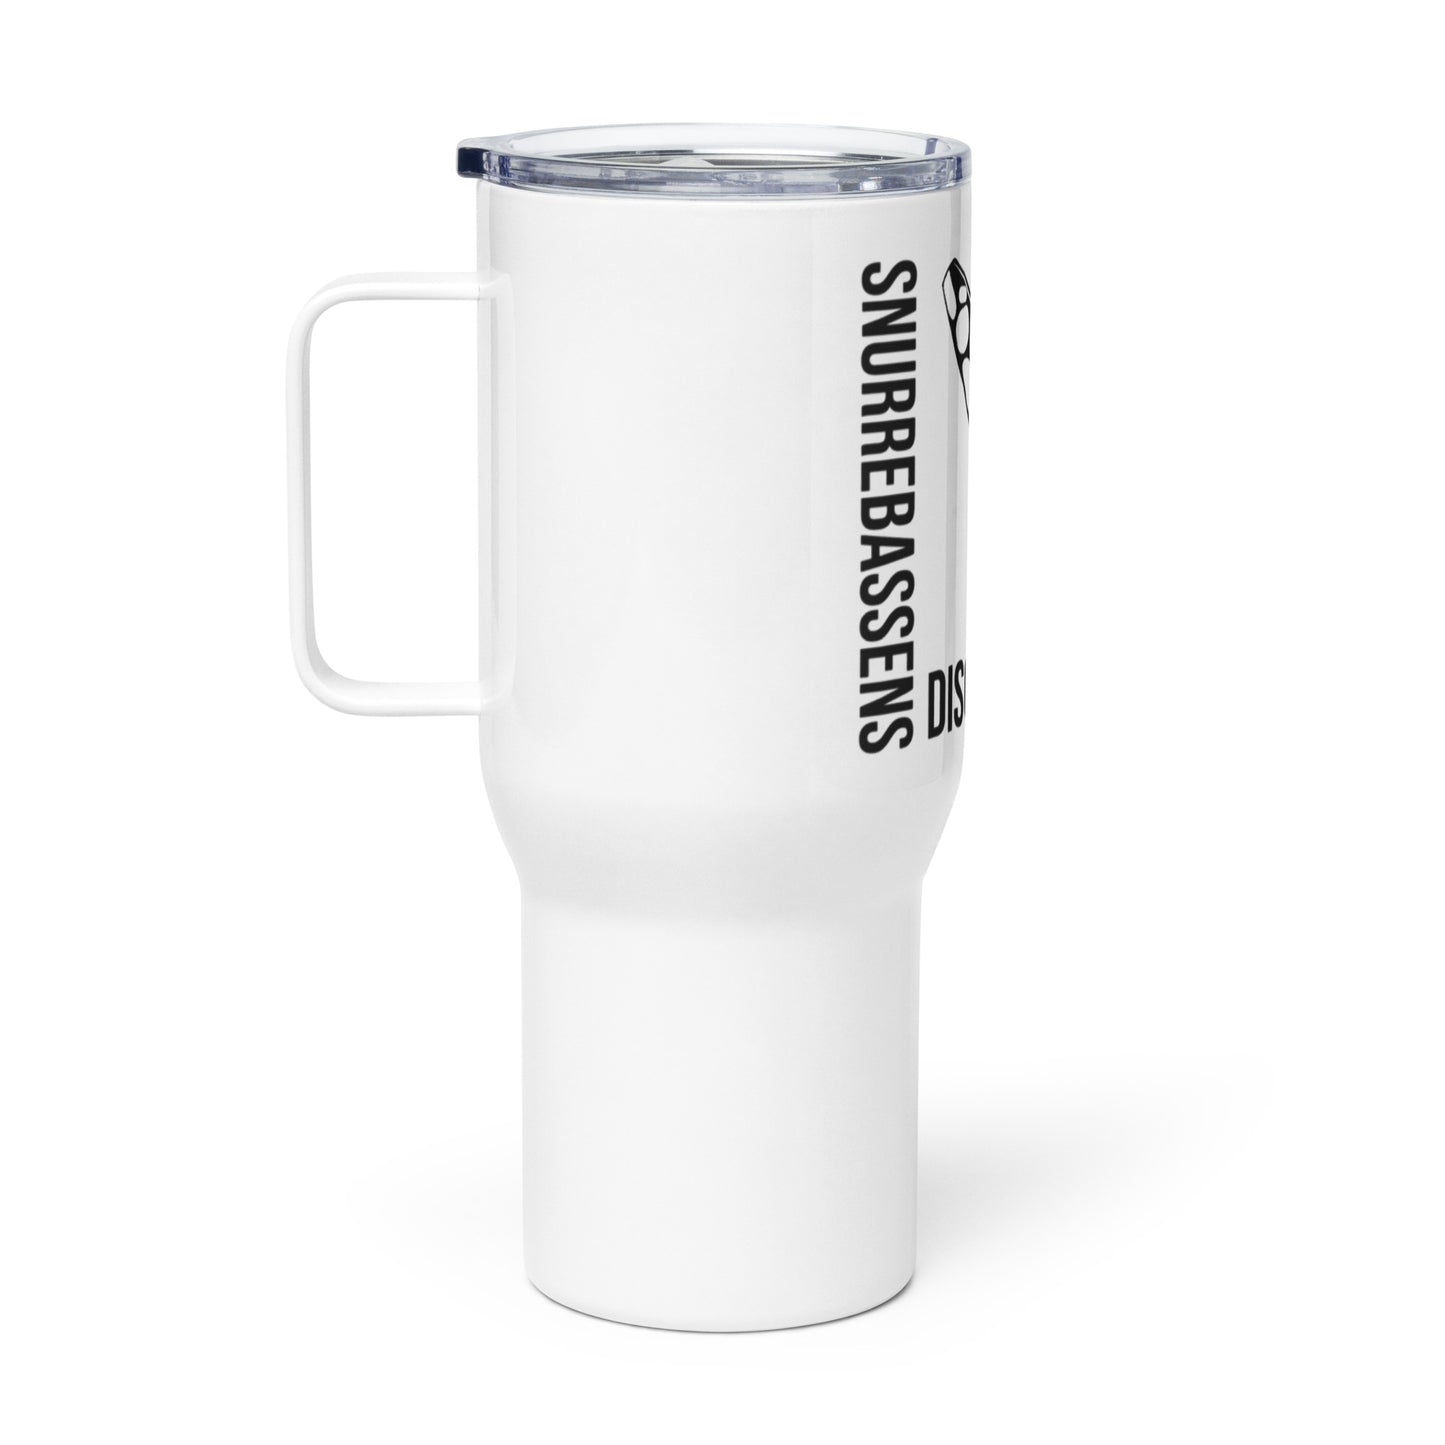 Snurrebassen's Travel Mug with handle